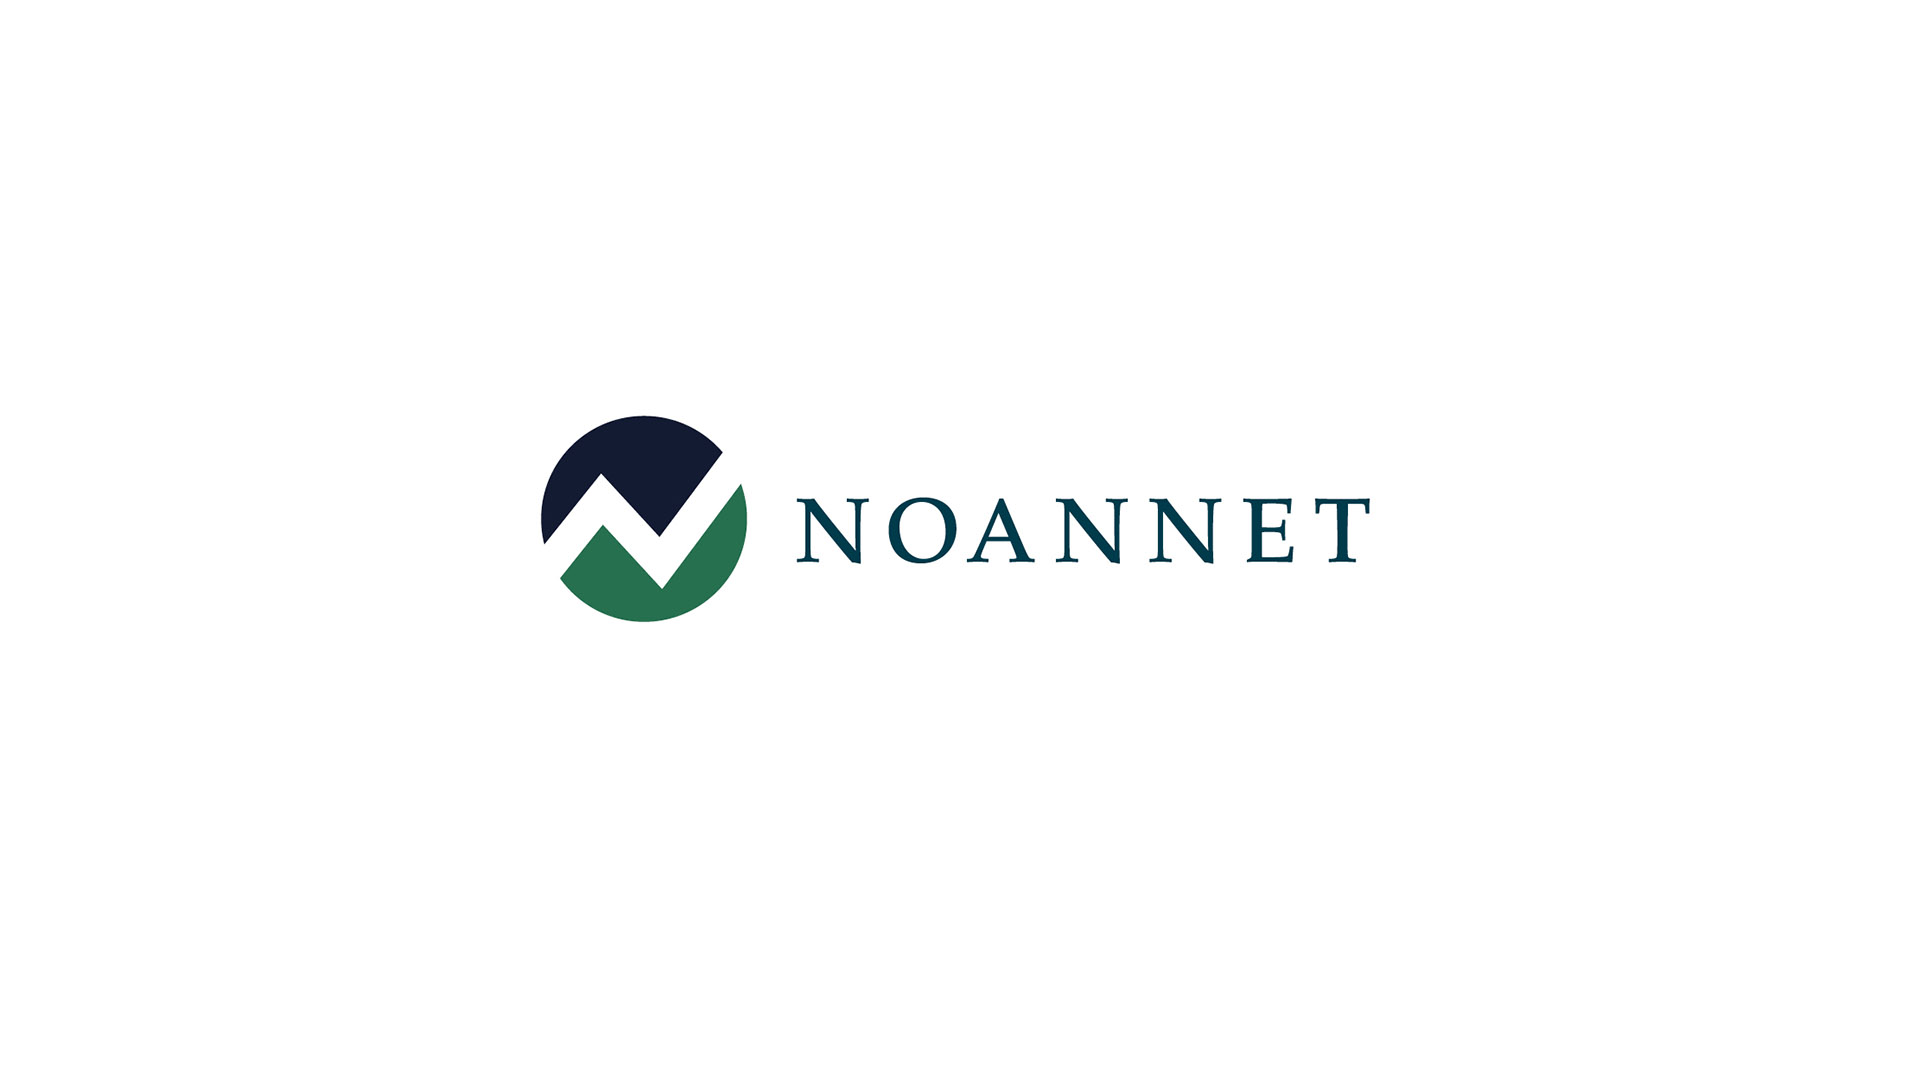 noannet group logo on white